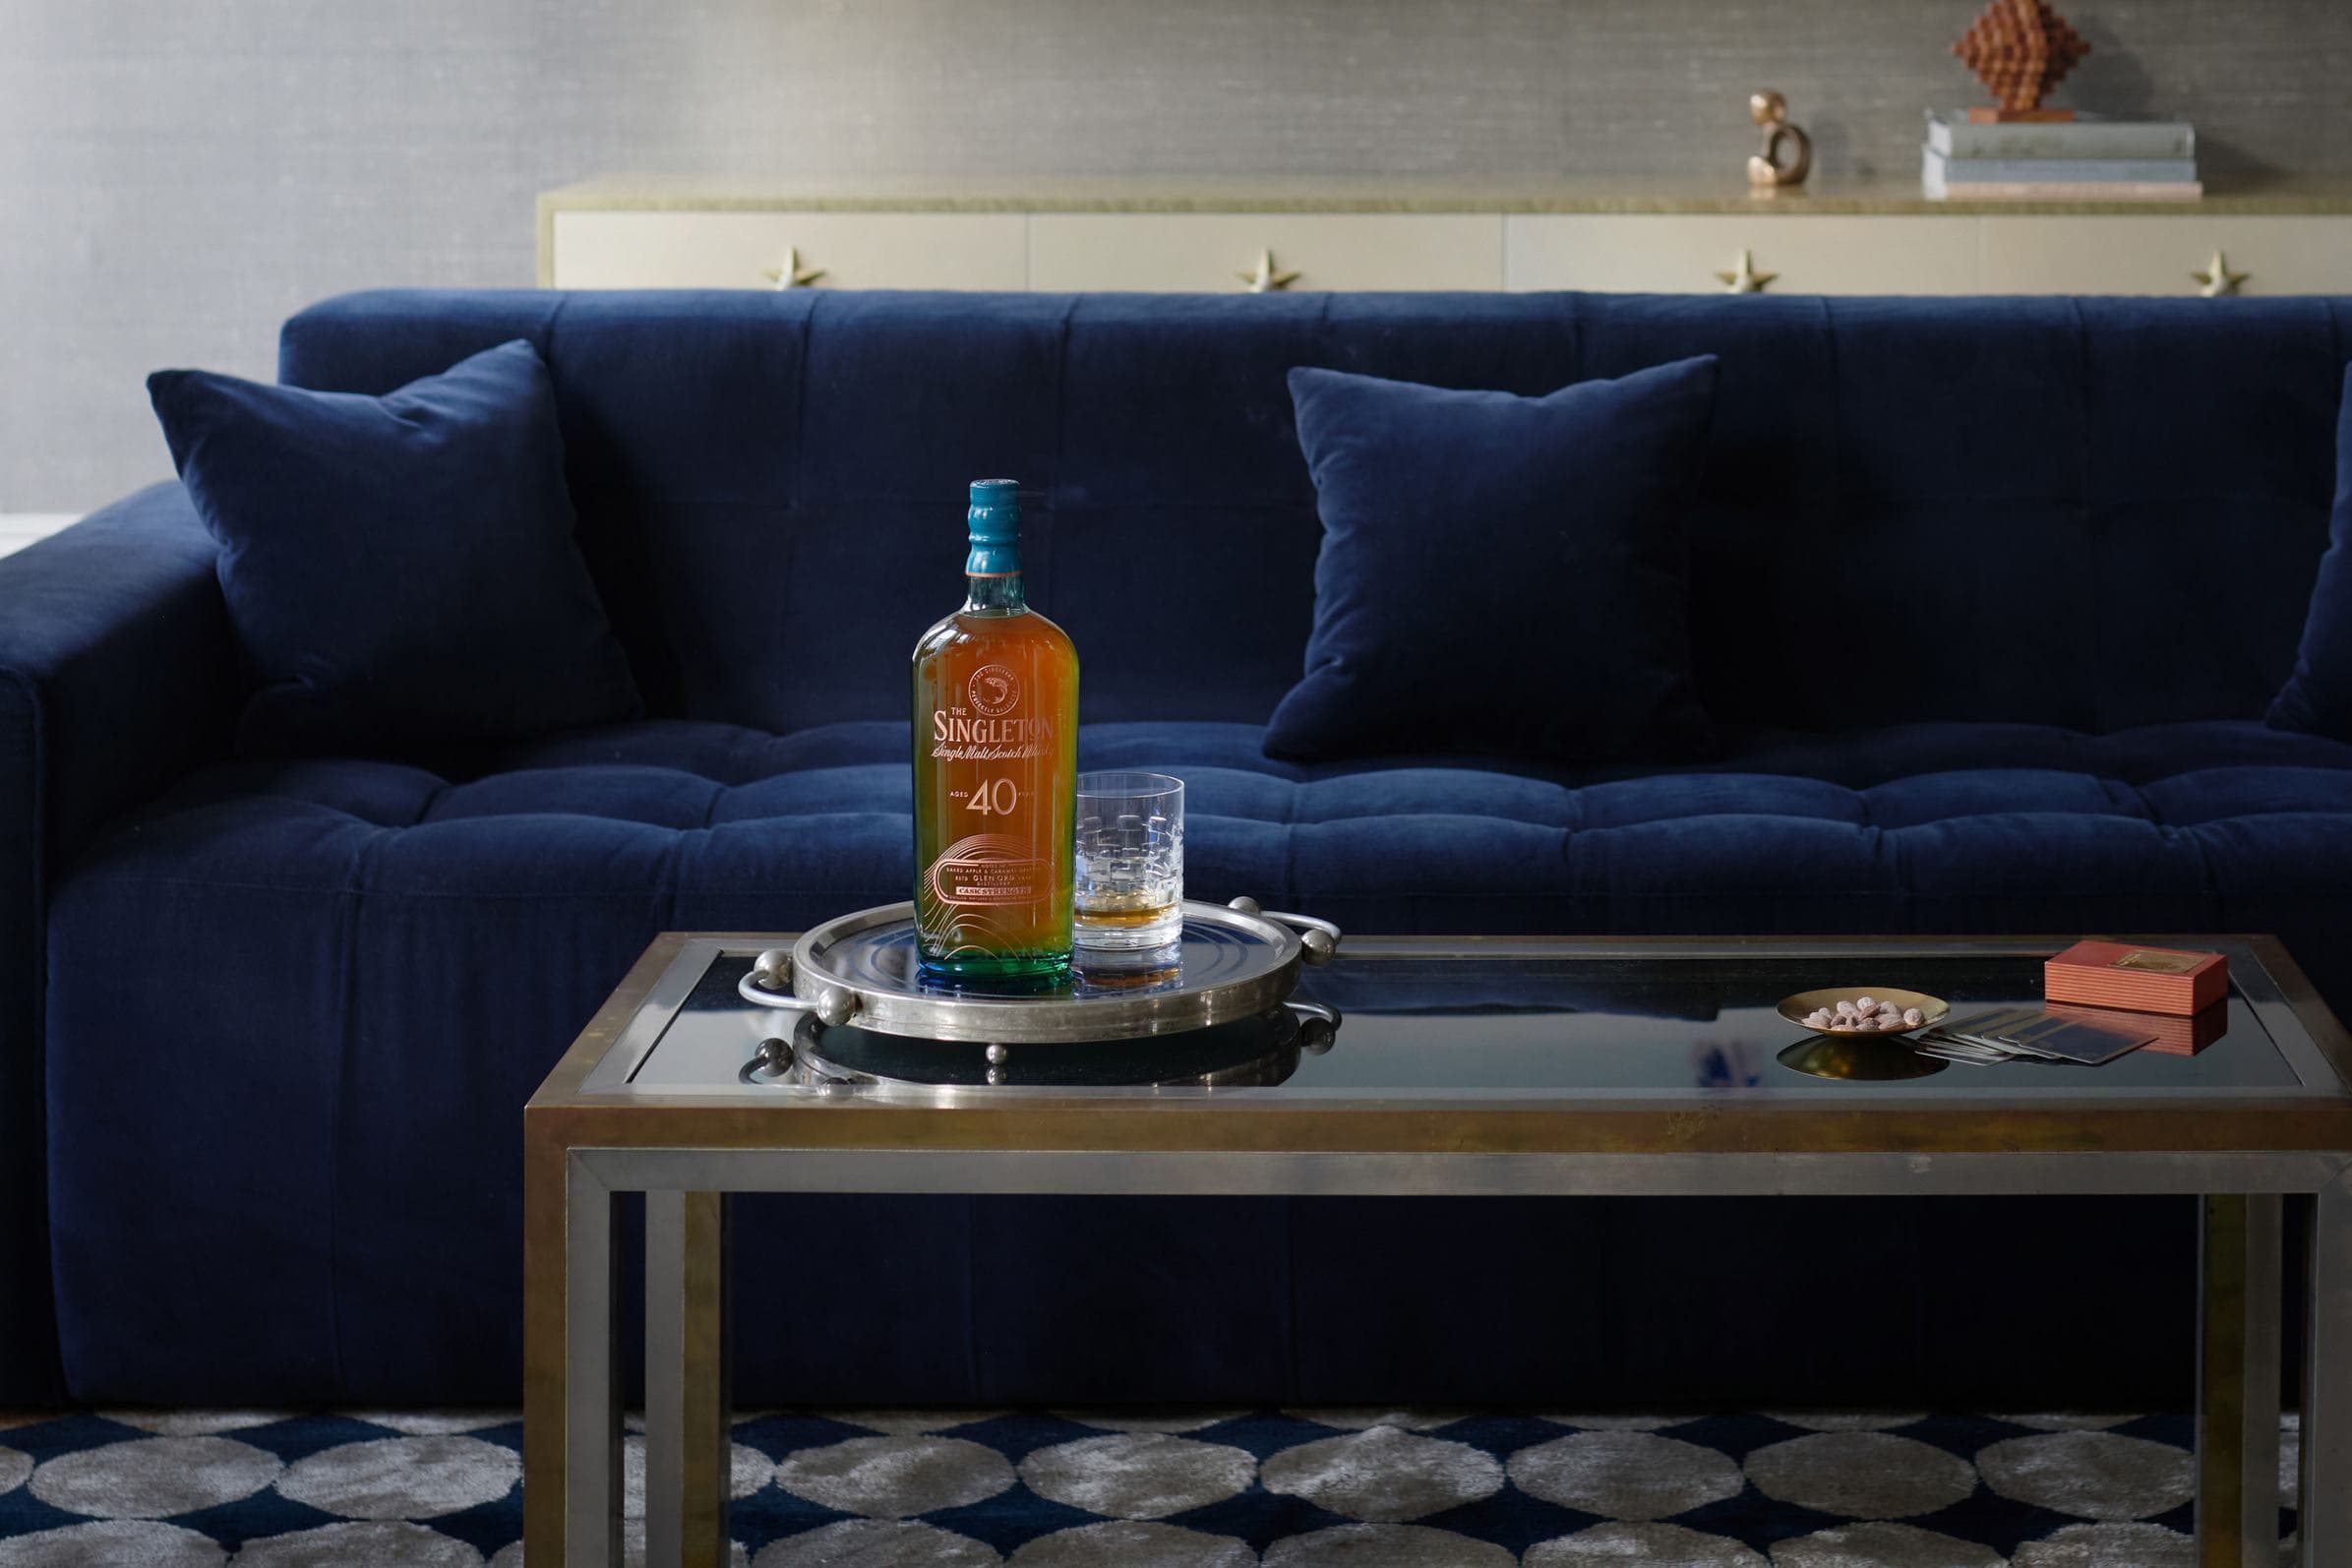 The Singleton 40 Year Old Bottle next to a luxury velvet sofa